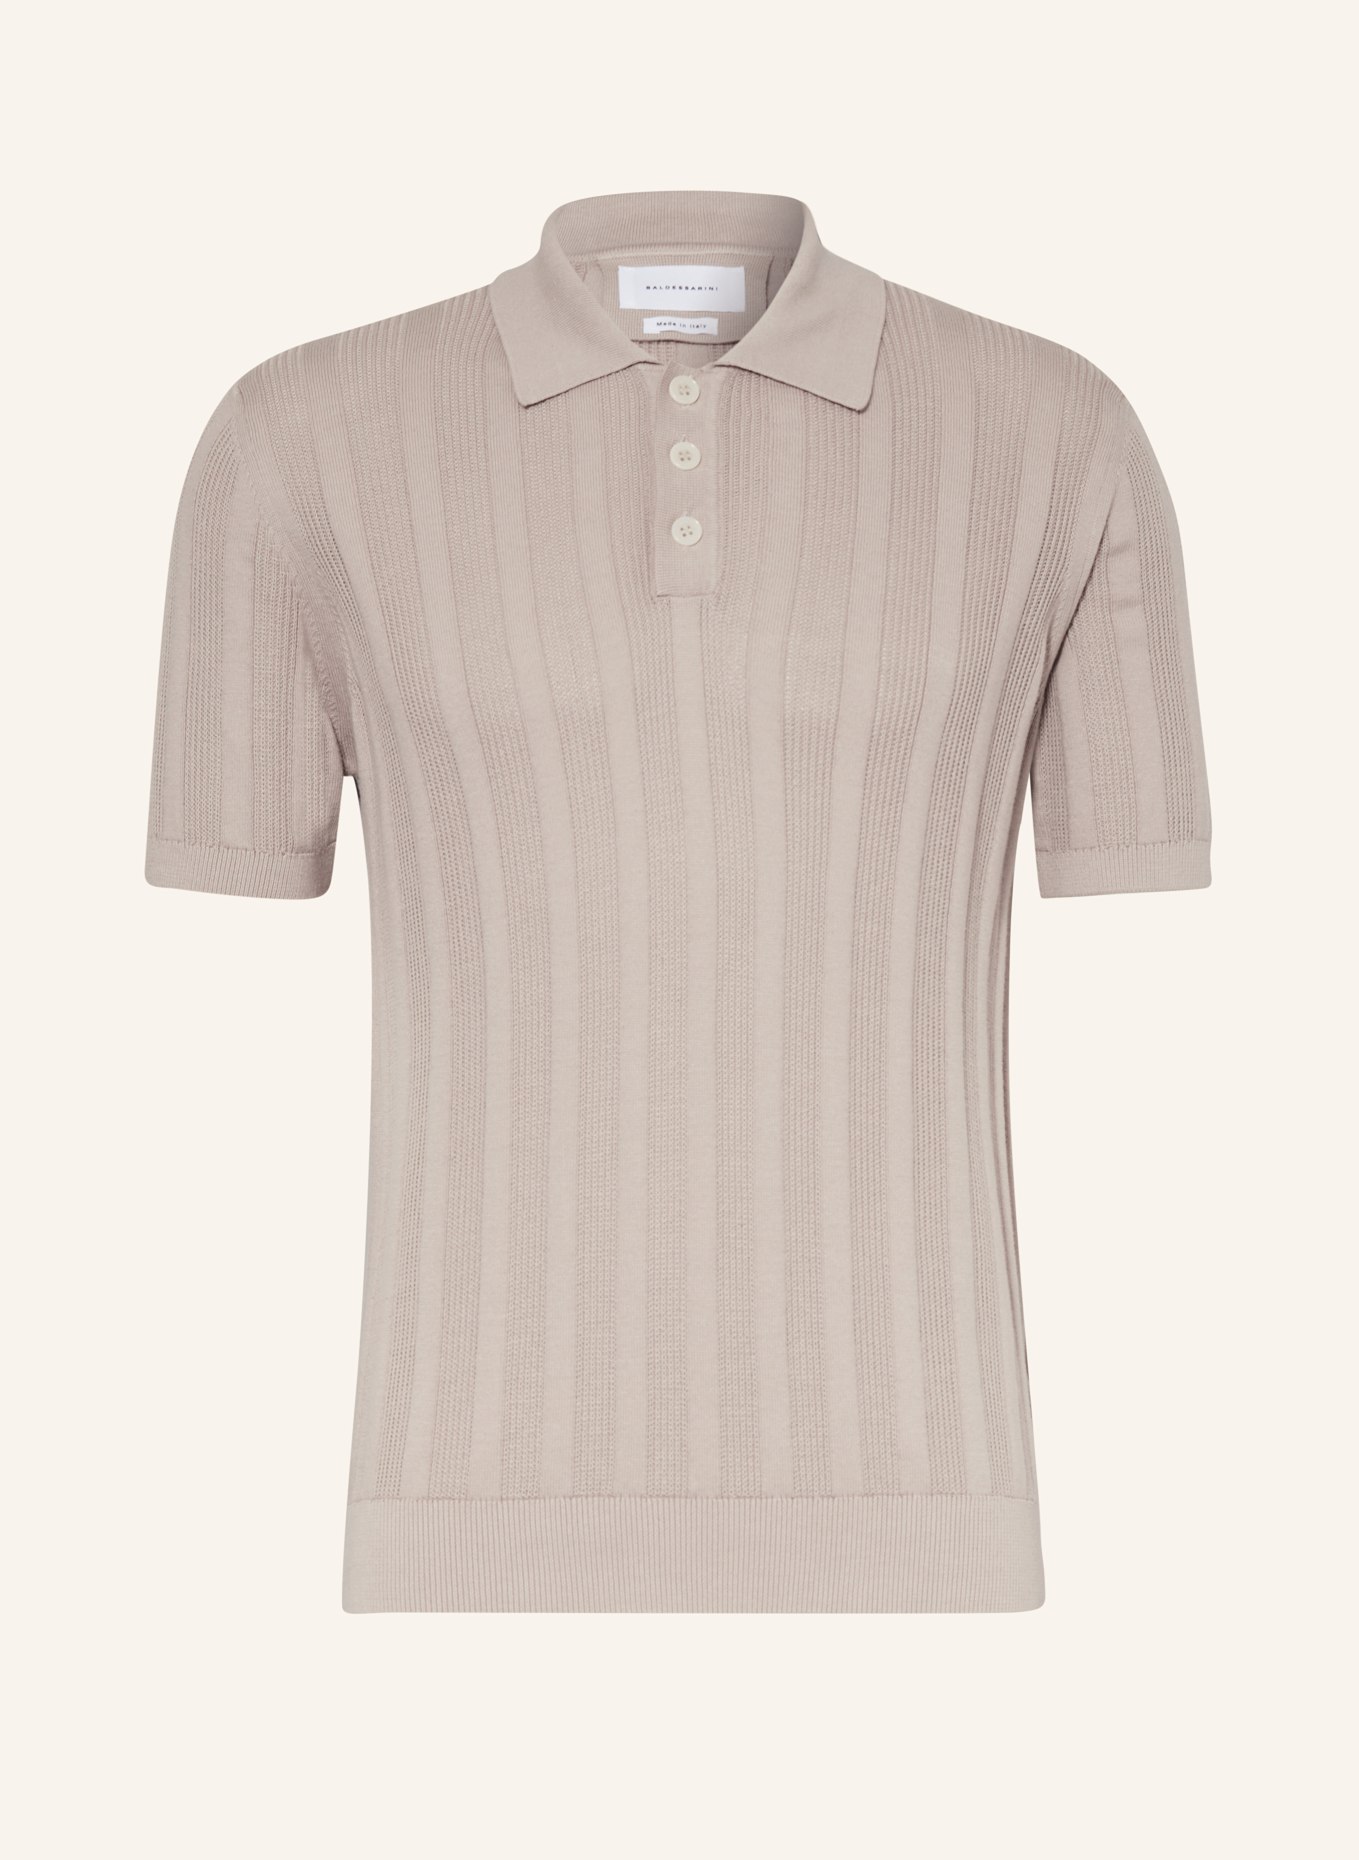 BALDESSARINI Strick-Poloshirt, Farbe: CREME (Bild 1)